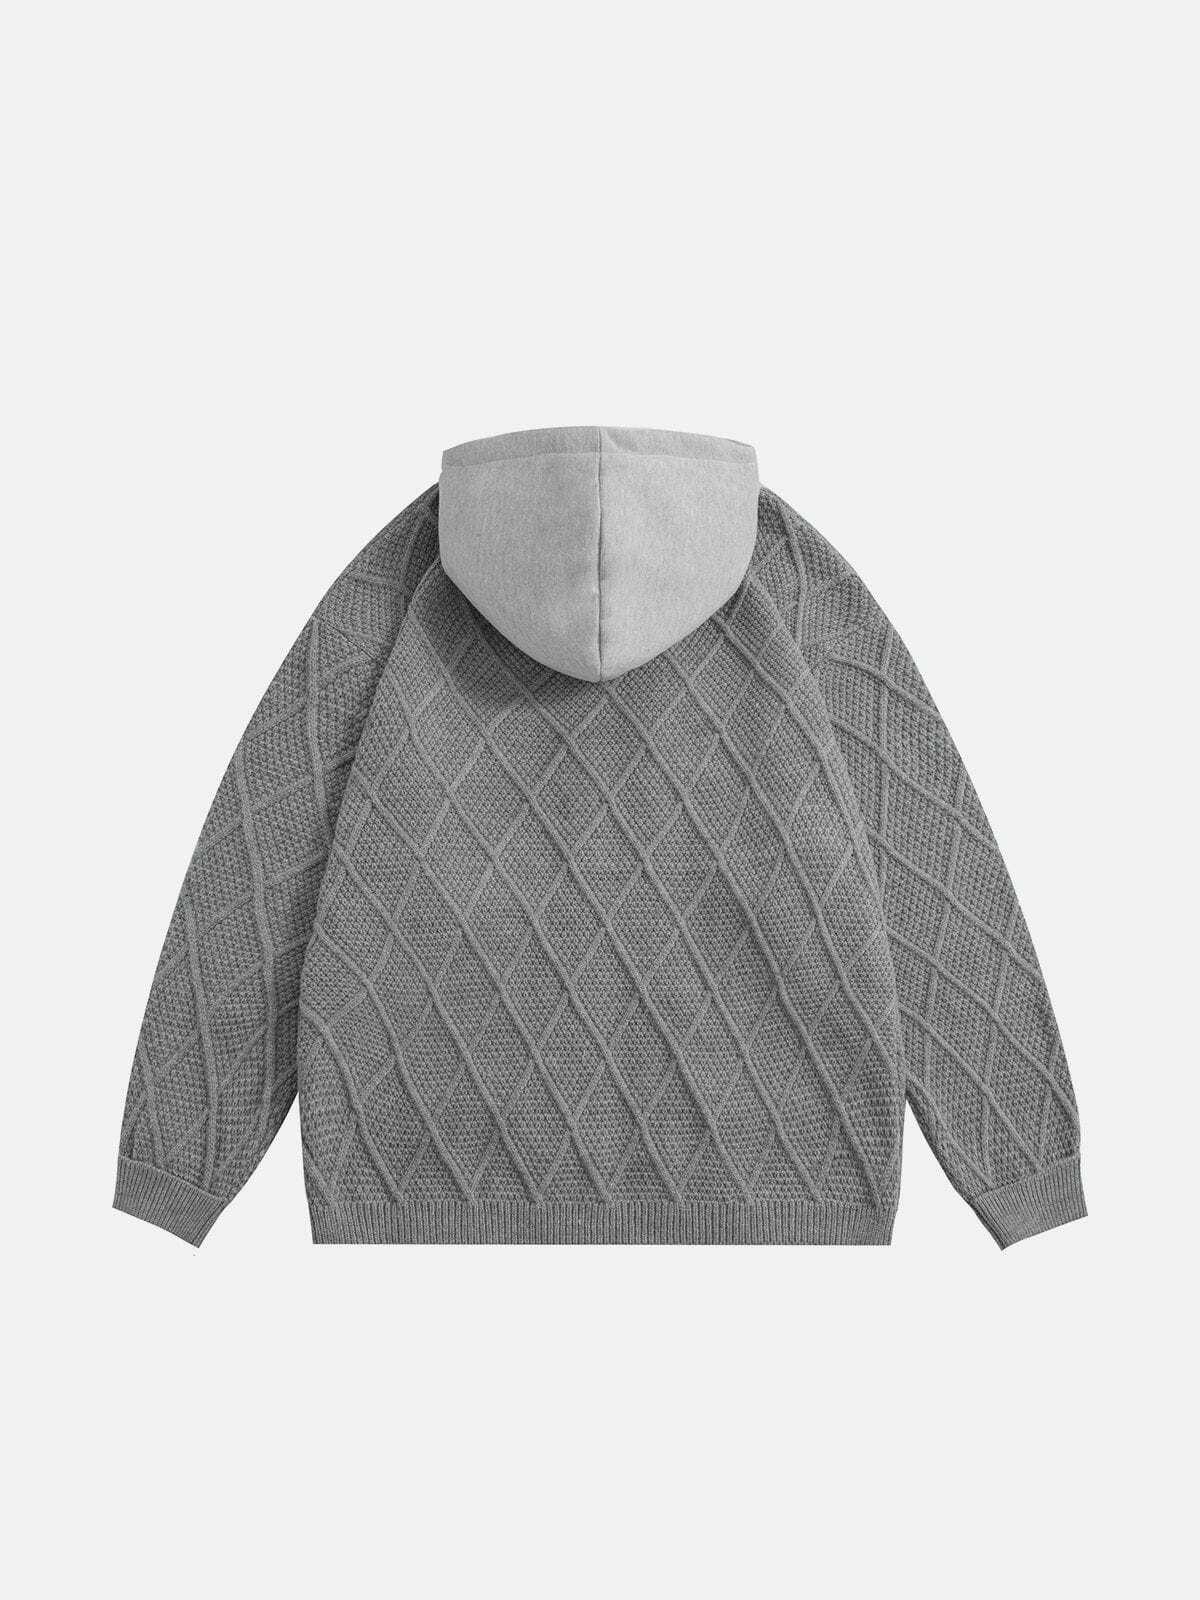 unique duallayer zipup hoodie edgy streetwear 2616